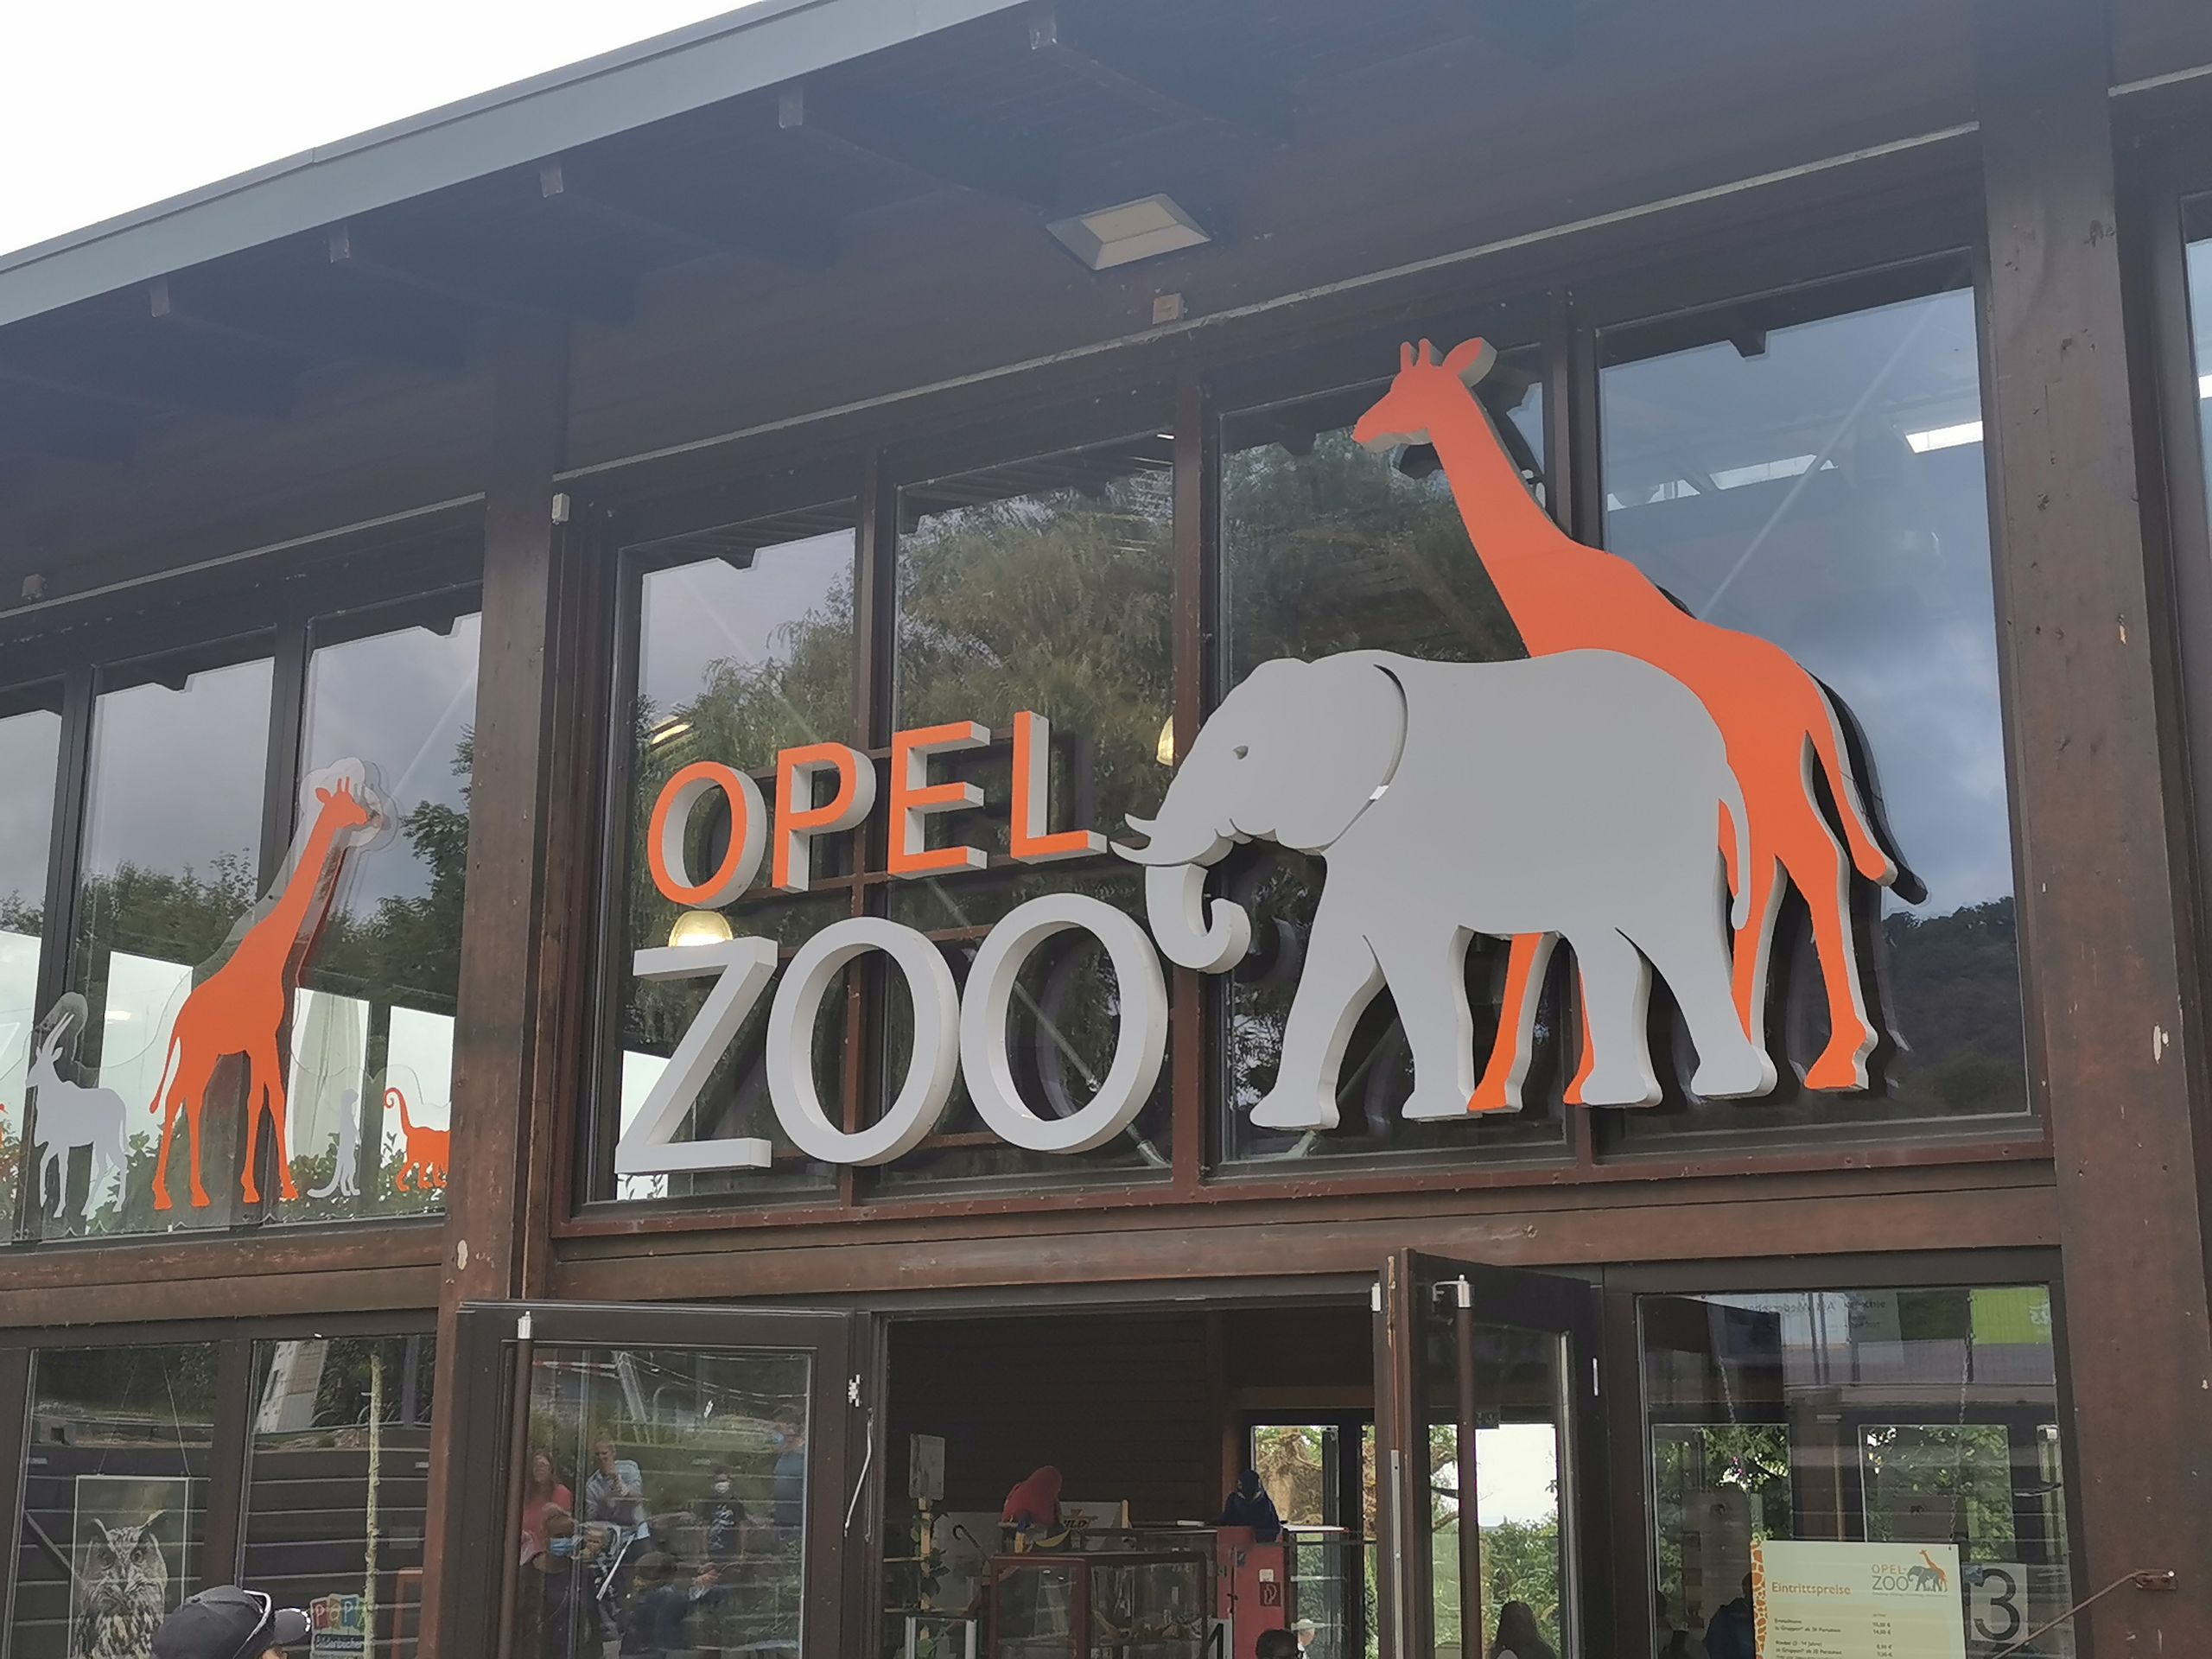 Wingang zum Opel-Zoo 